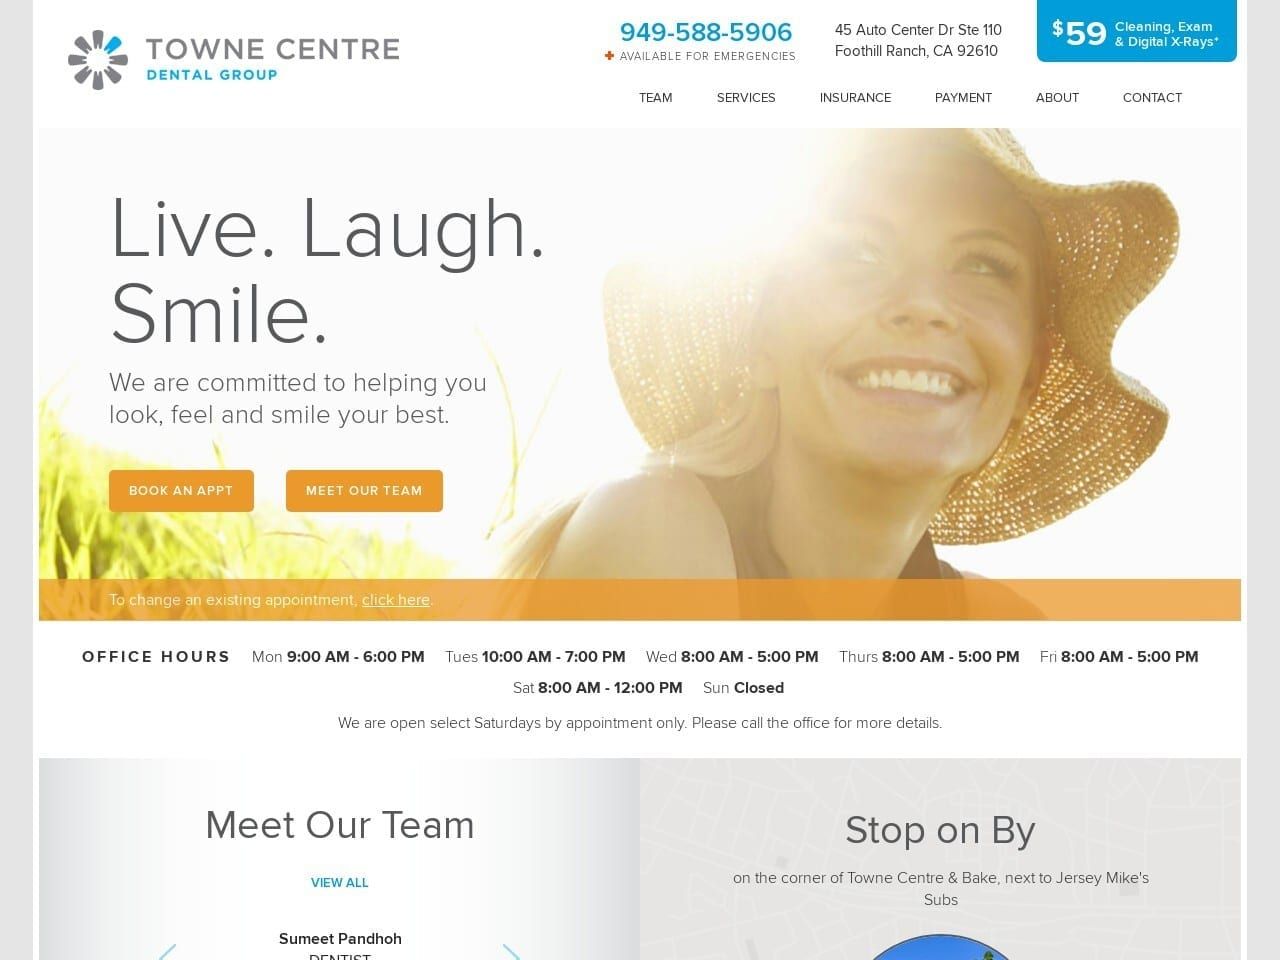 Towne Centre Dental Group Website Screenshot from foothillranchdental.com